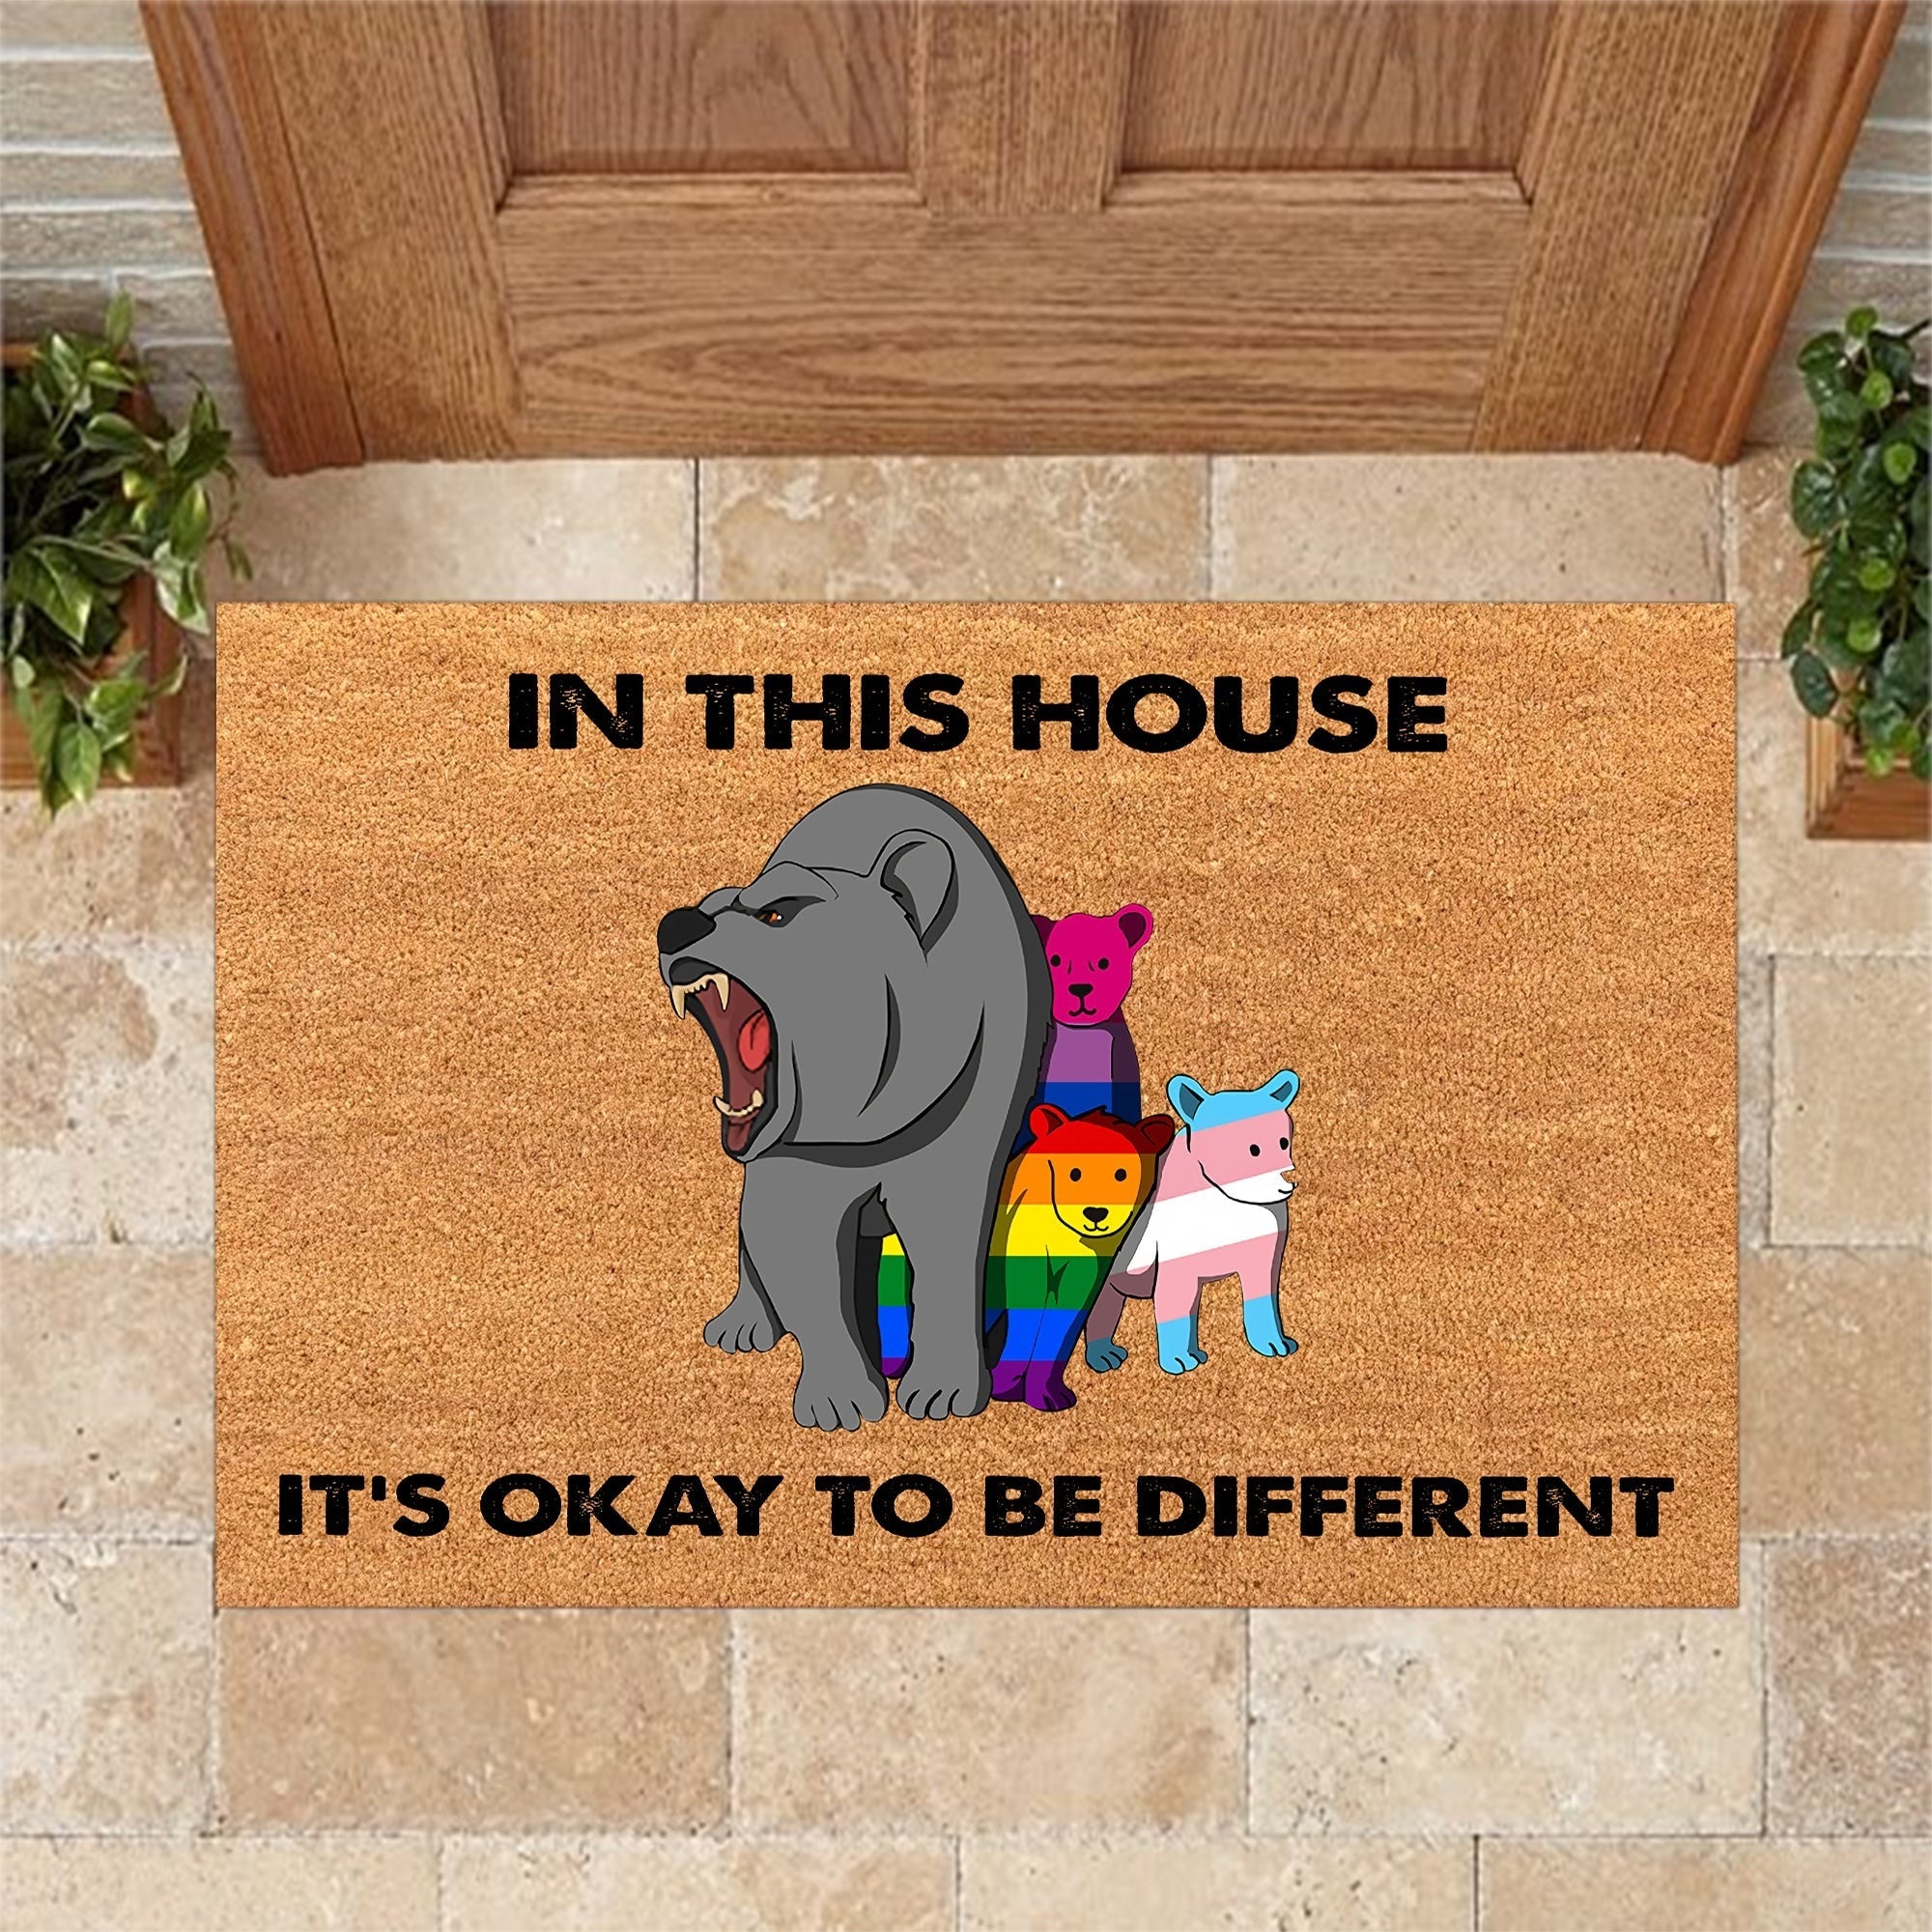 Pride Doormat Everyone Is Welcome Here/ Lgbtq+ Pride Doormat/ Lgbt Home Doormat